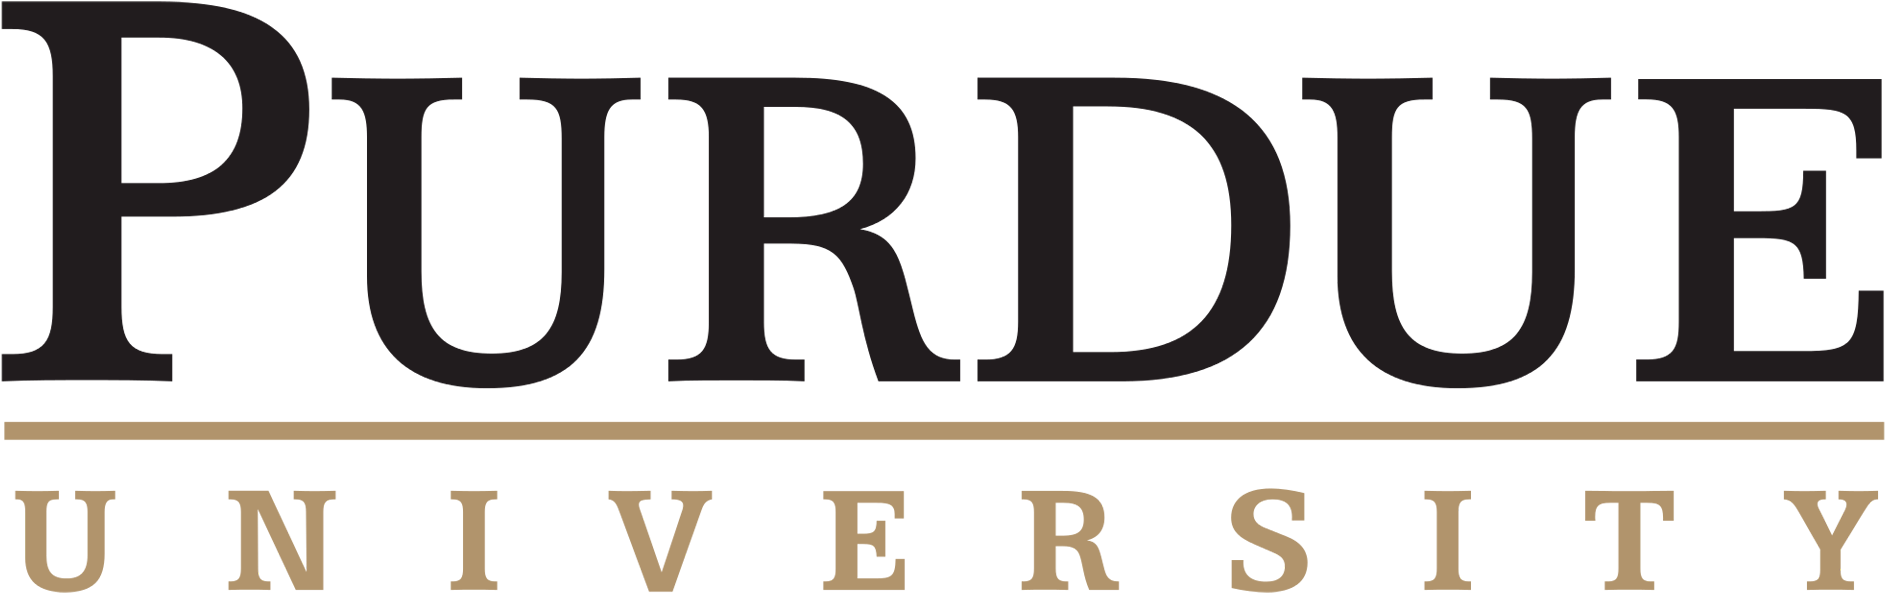 Purdue University Logo - Purdue University Fort Wayne (1920x1080)